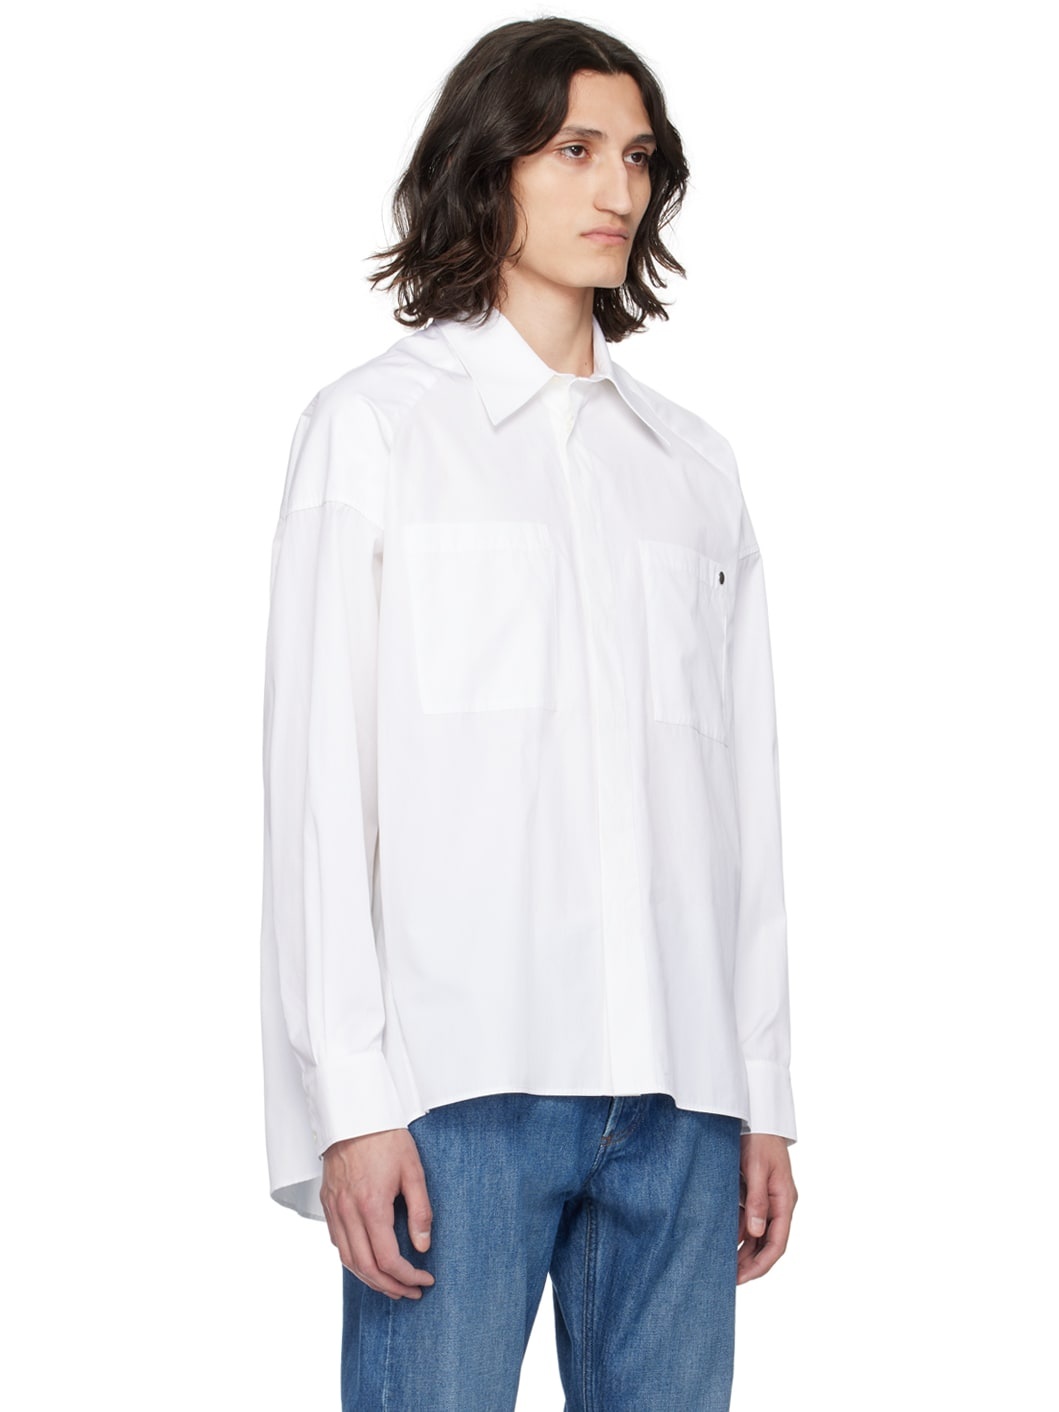 White Natacha Ramsay-Levi Edition Warvol Shirt - 2